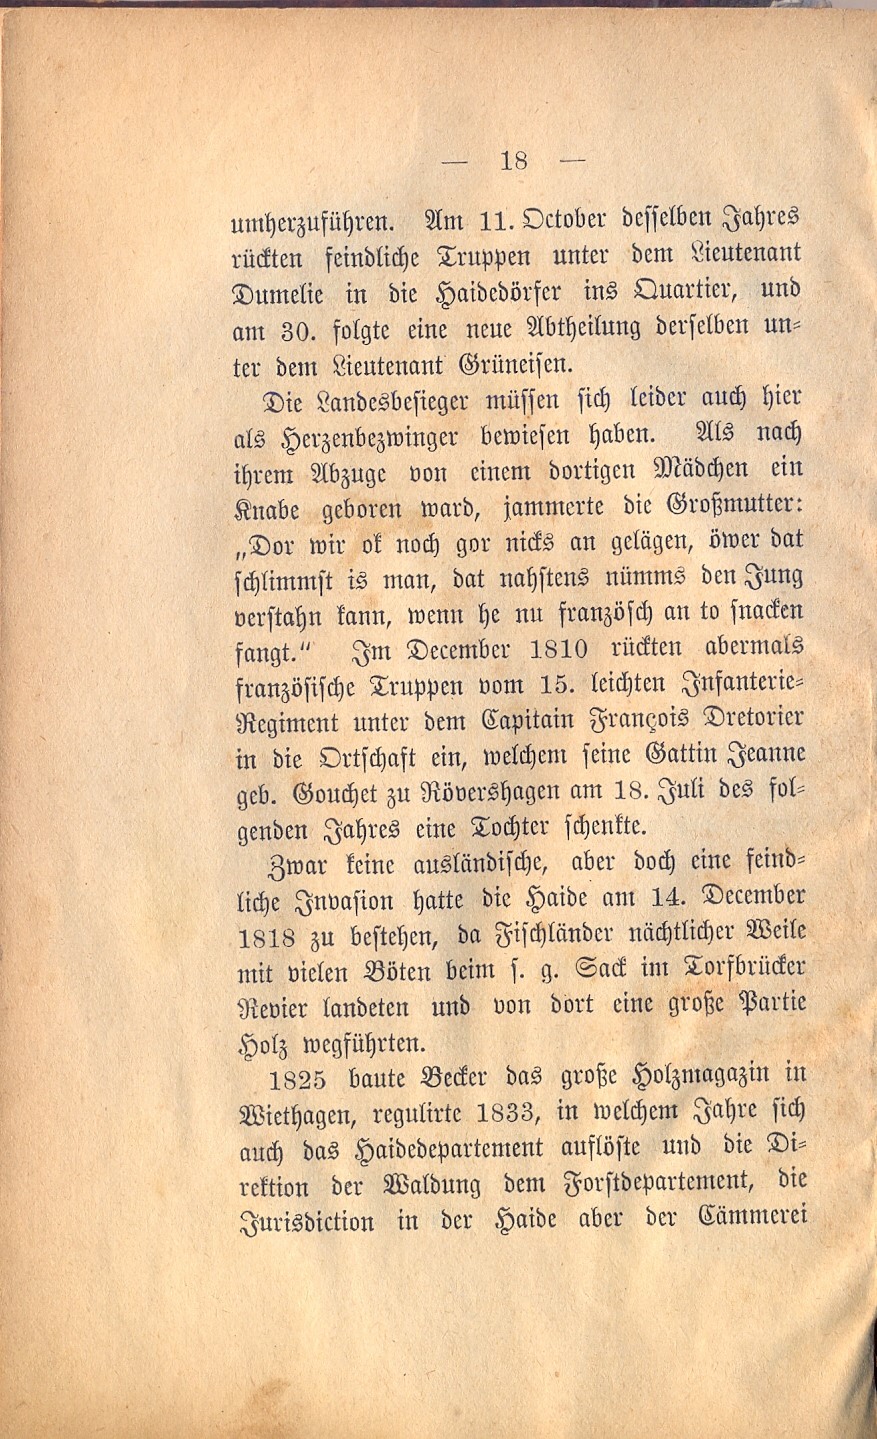 Dolberg KW 1885 018